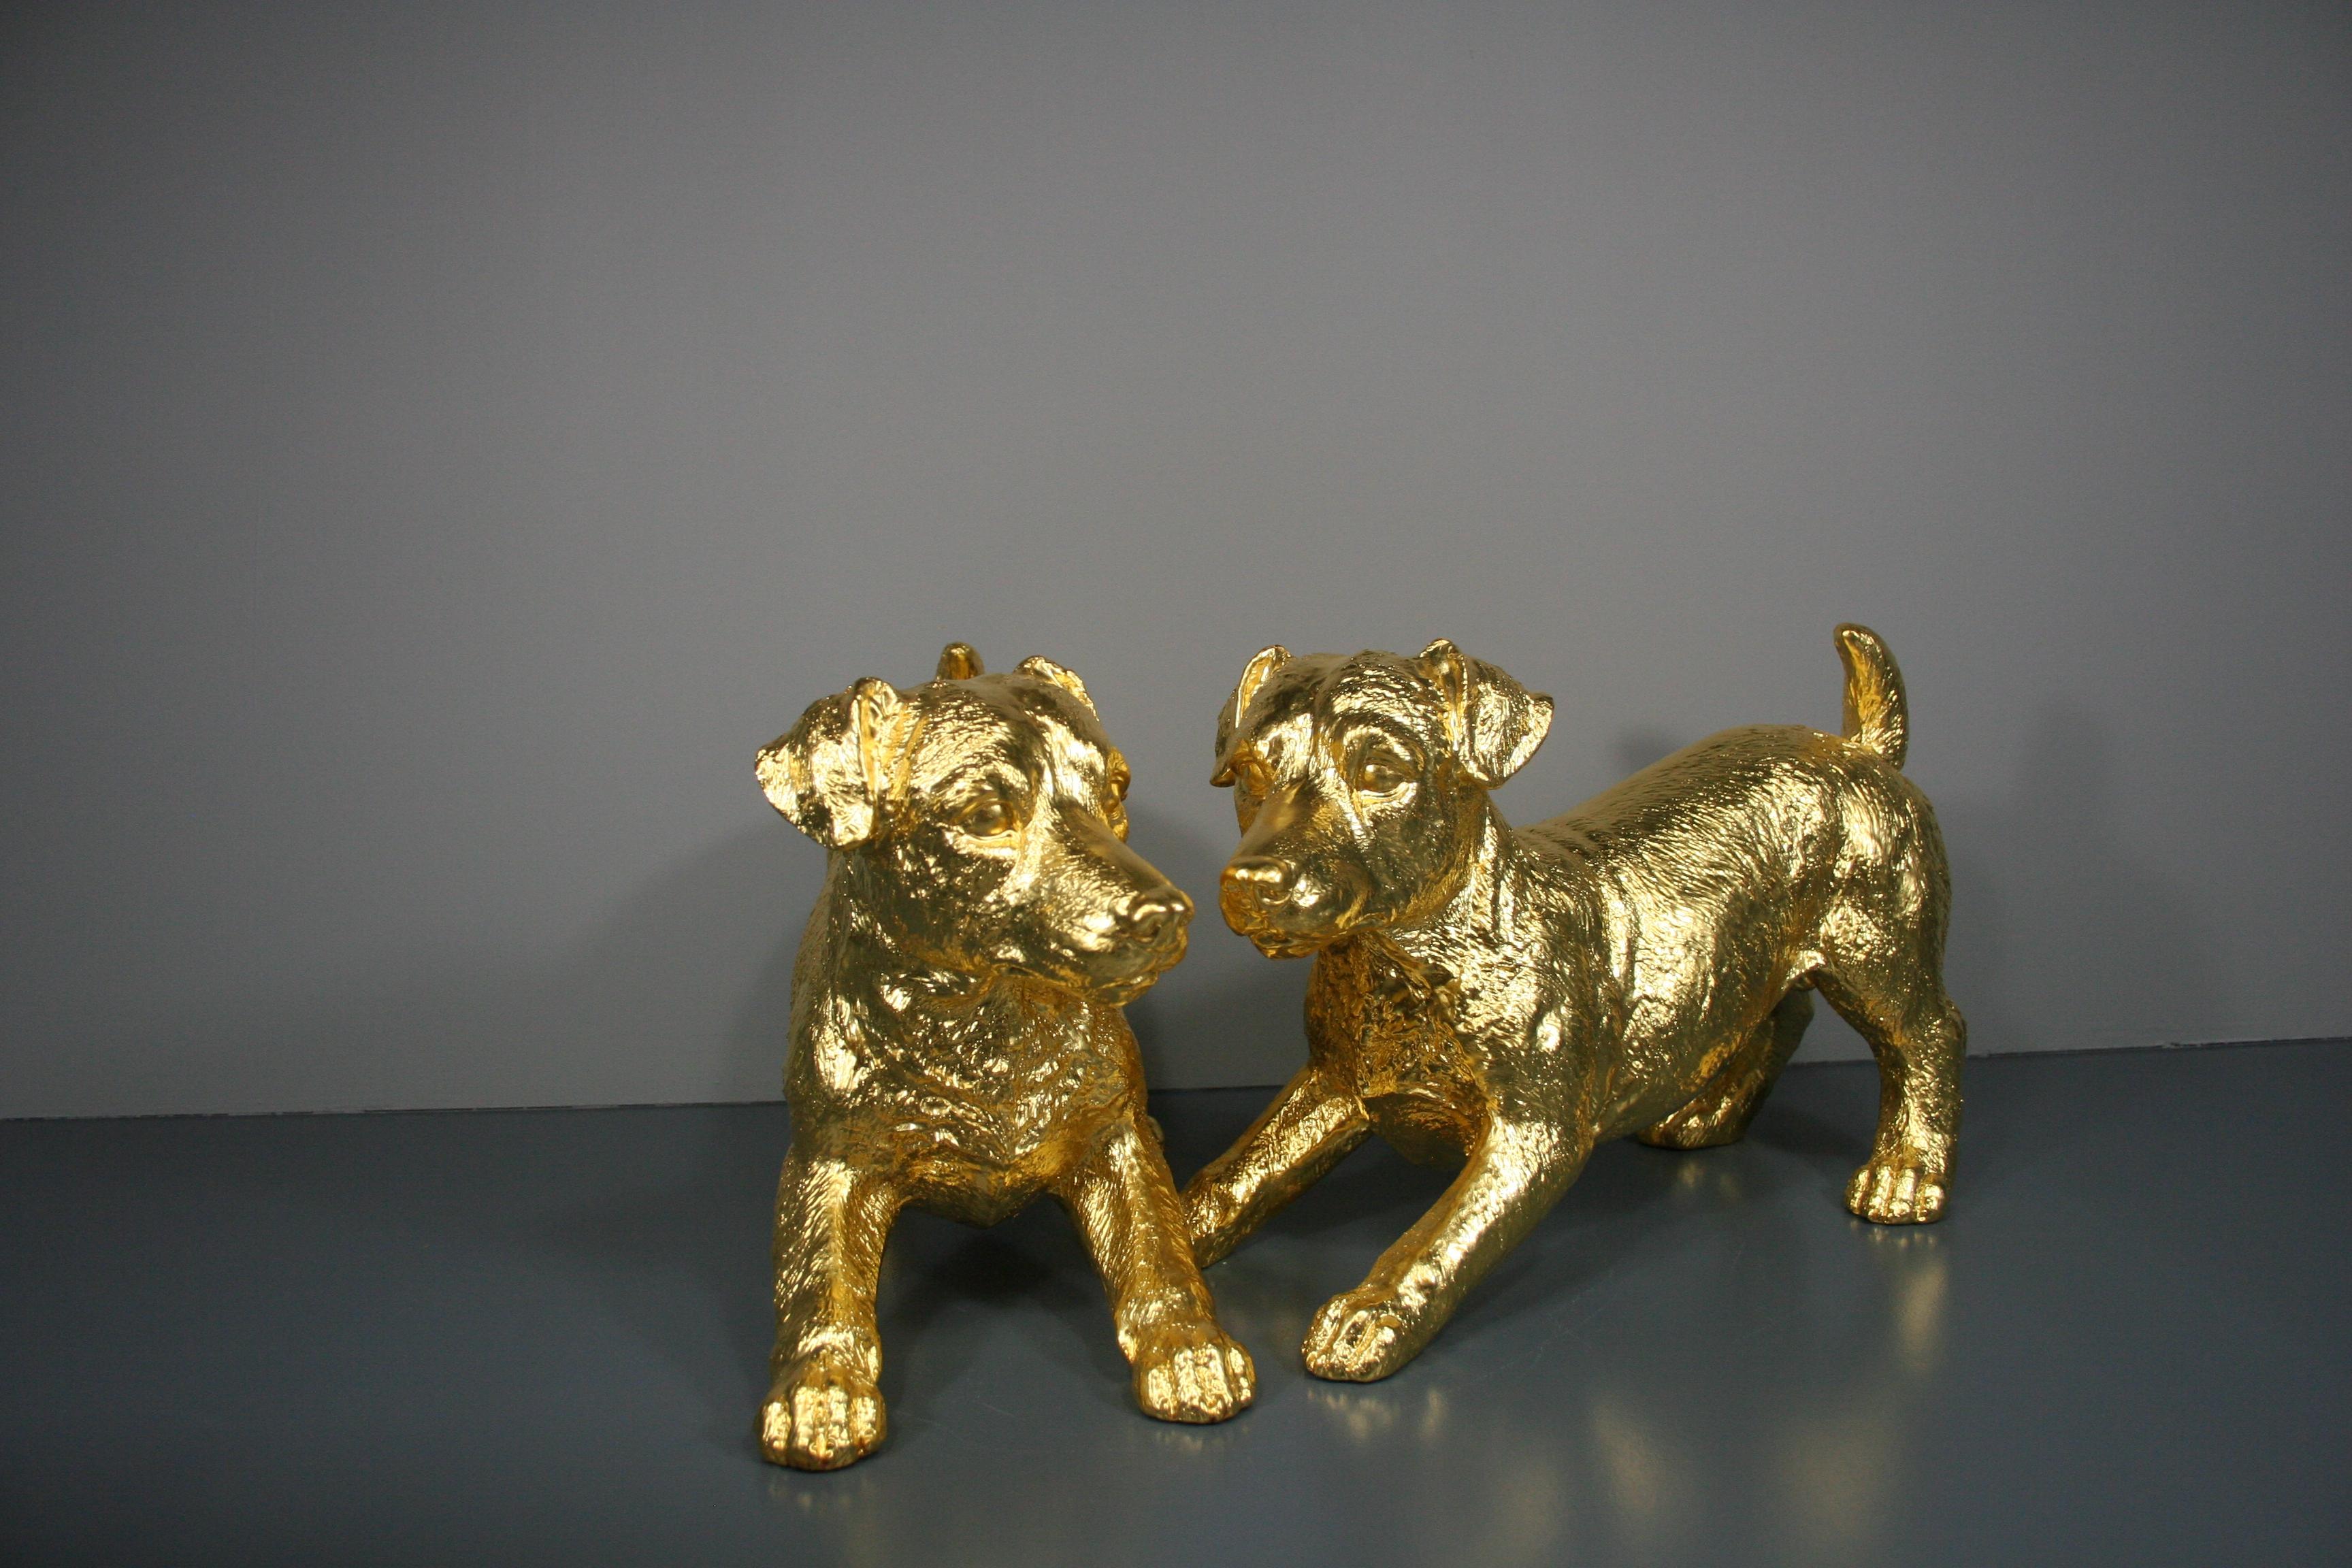 Steven Figurative Sculpture - Golden Jack Russel pair 24 Karat gilded